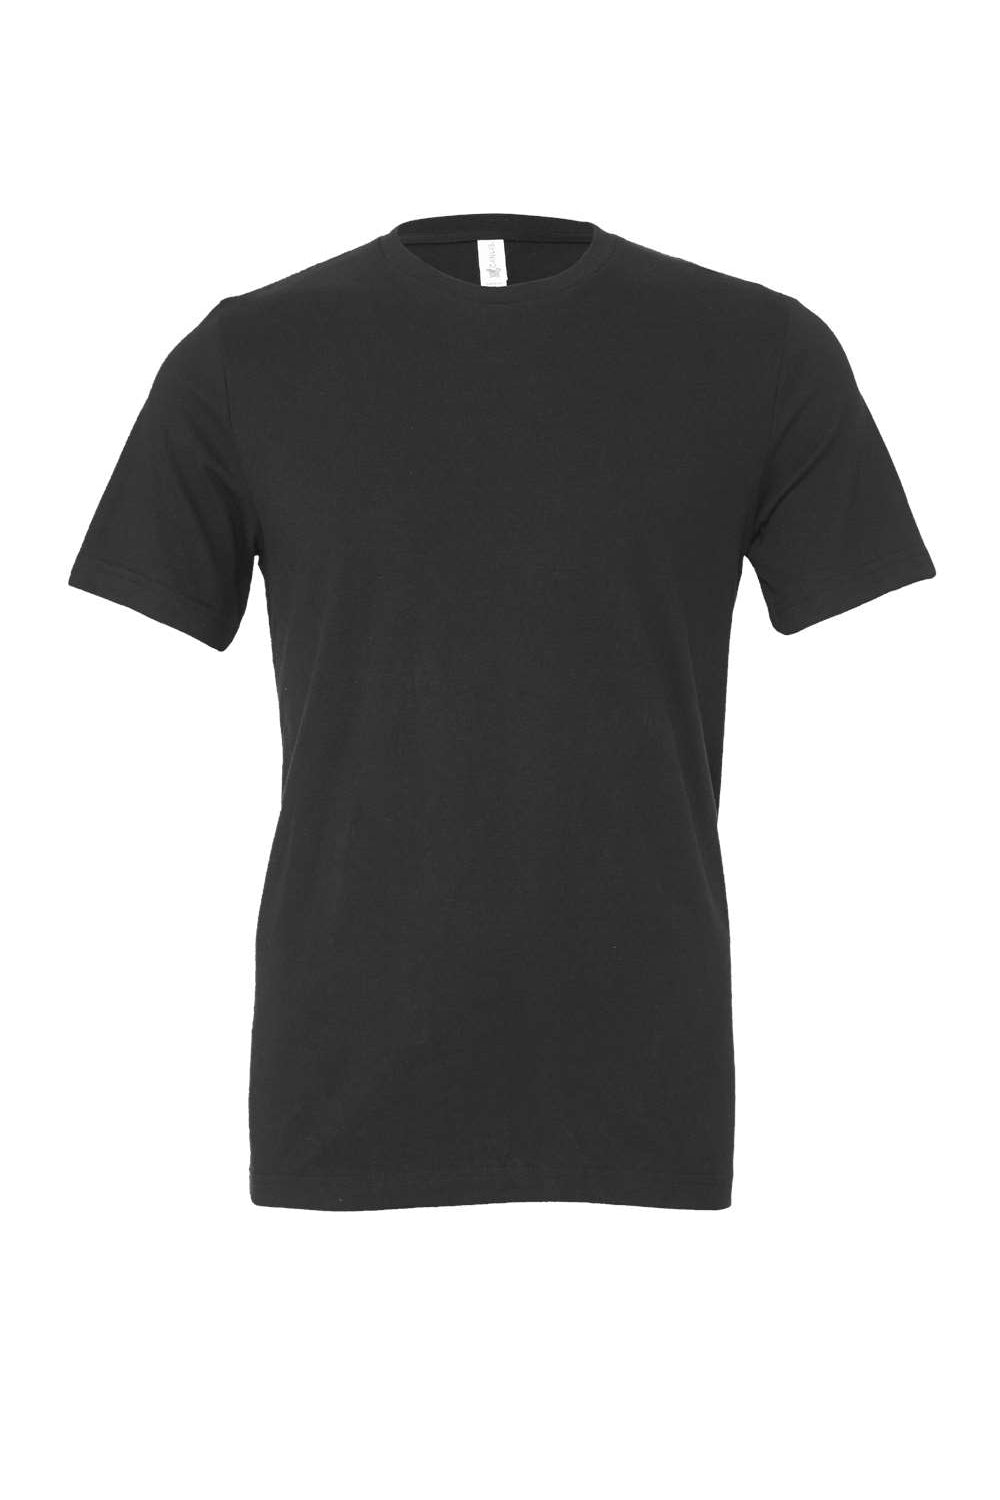 Bella + Canvas BC3001/3001C Mens Jersey Short Sleeve Crewneck T-Shirt Dark Grey Flat Front